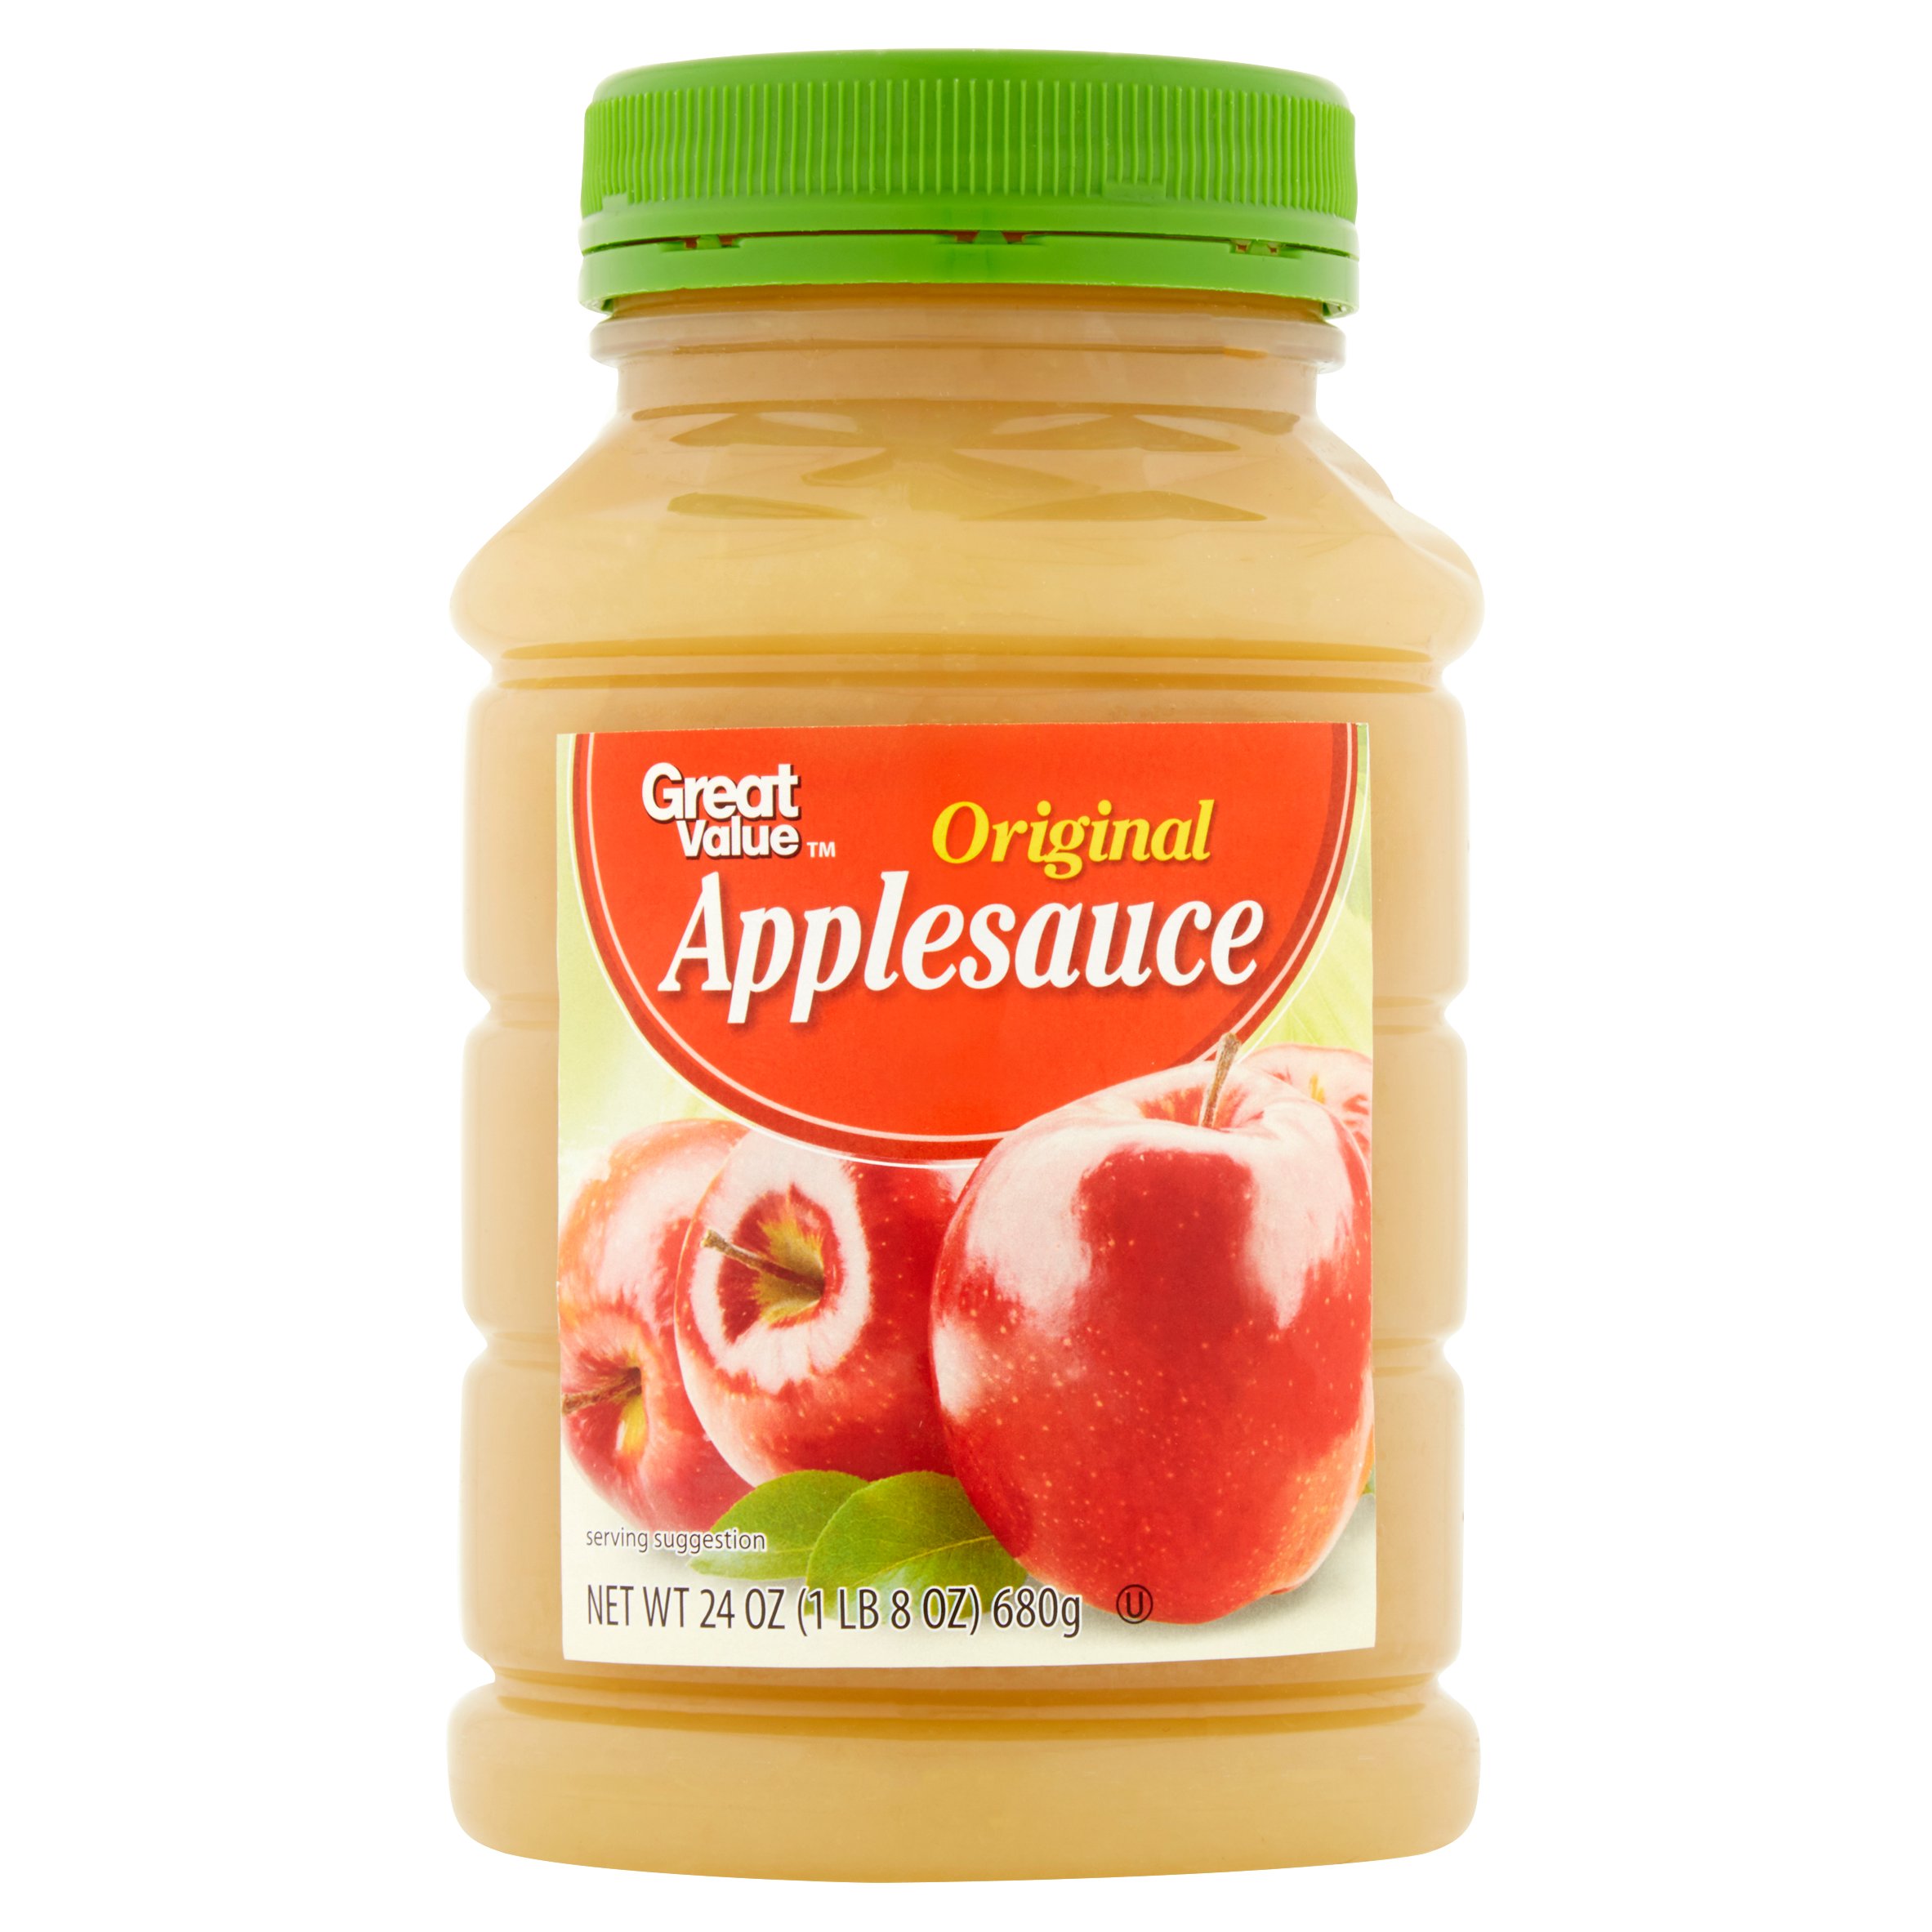 Great Value Original Applesauce, 24 Oz Image